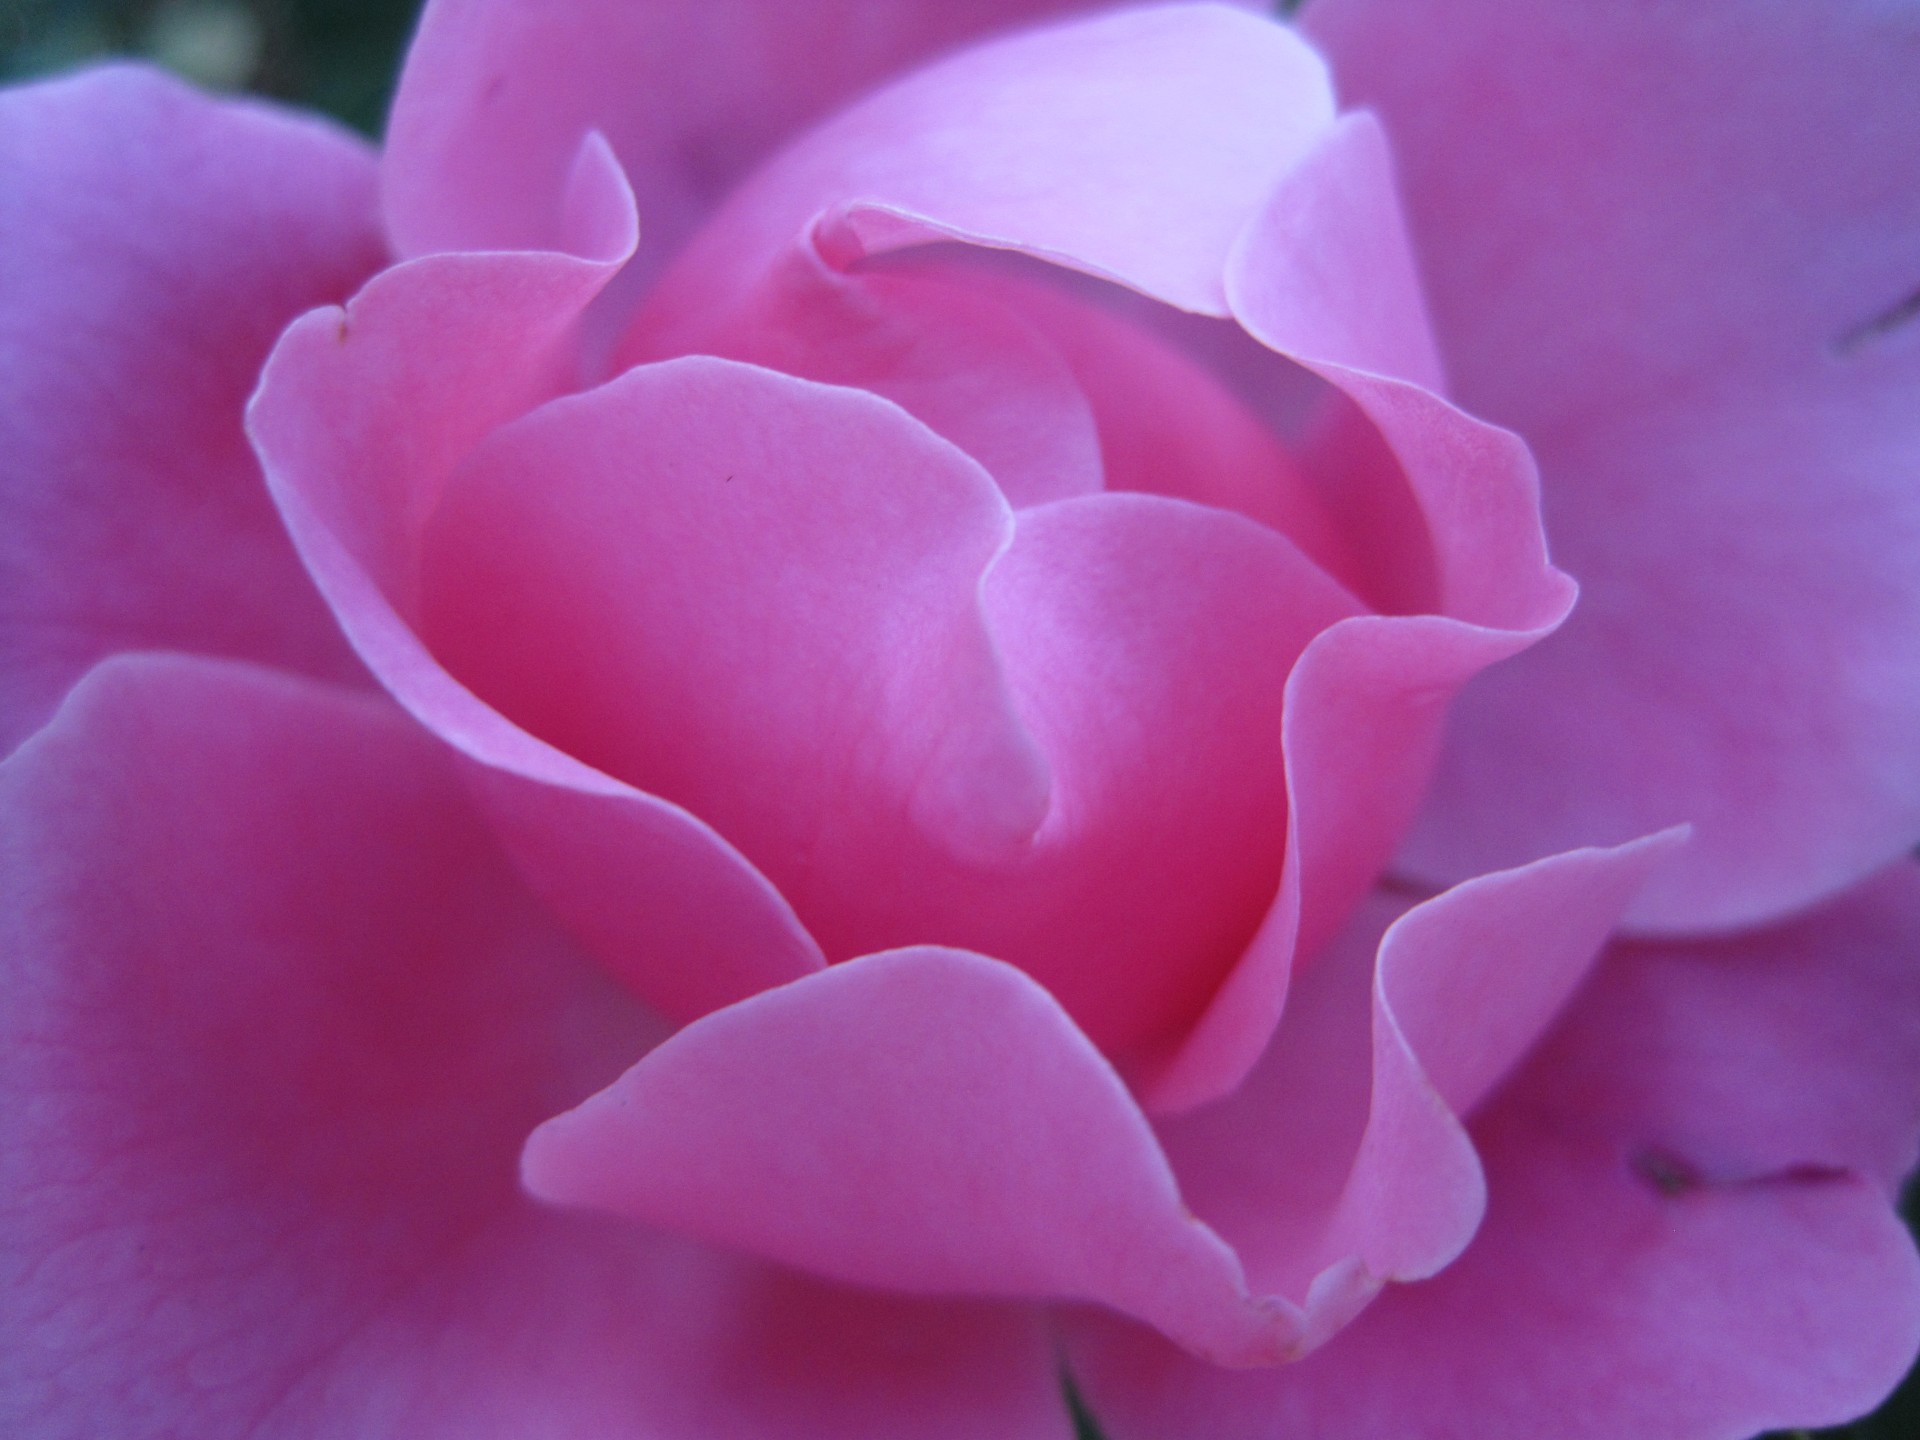 rose flower bloom free photo